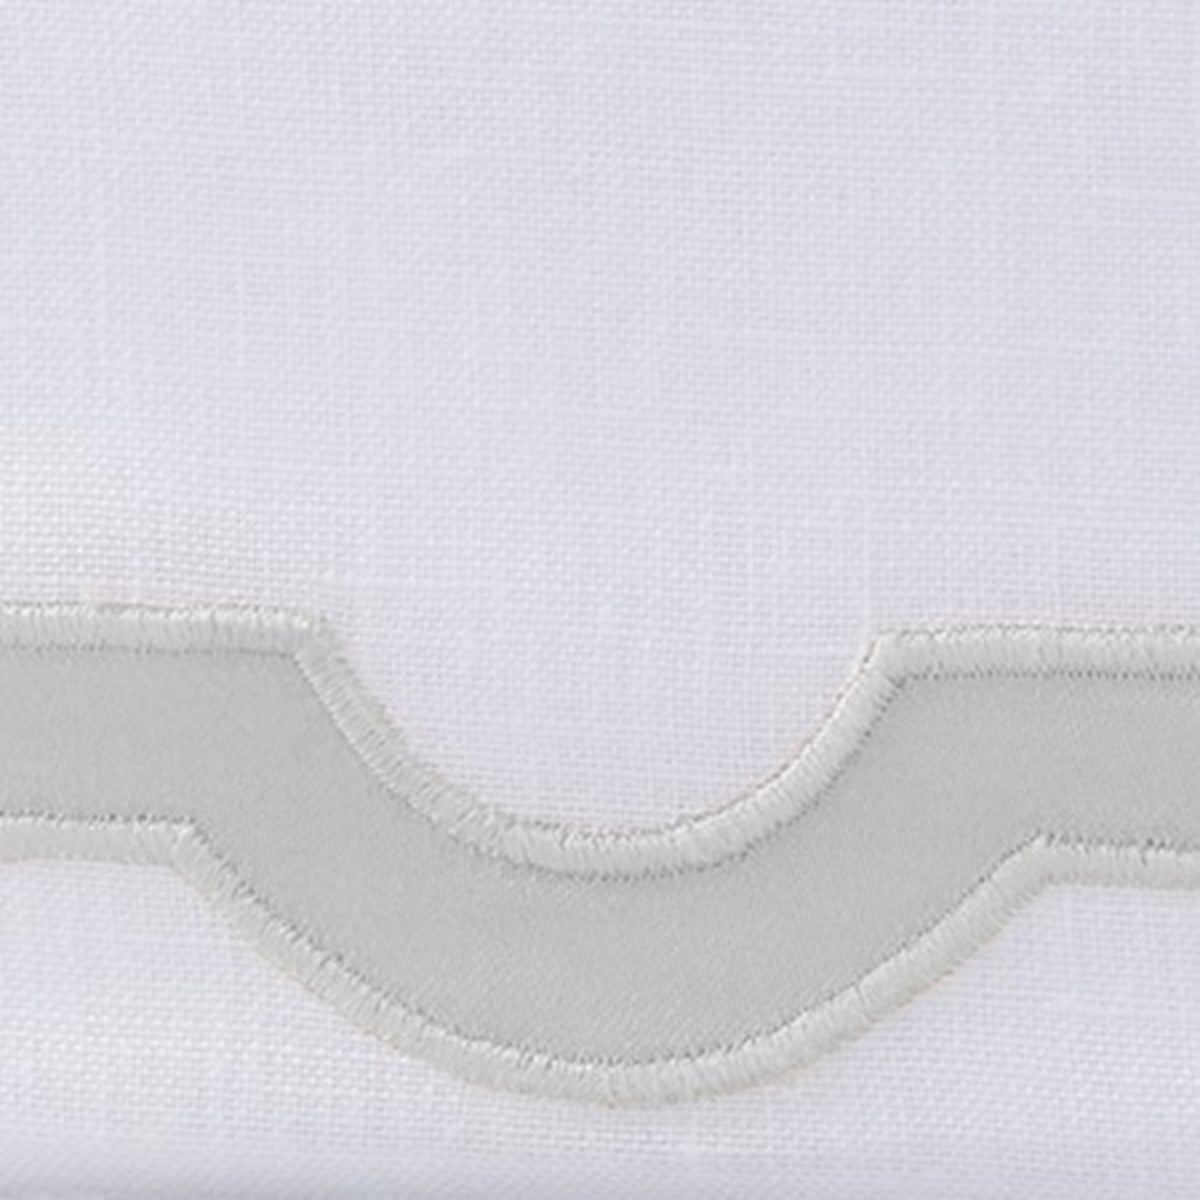 Swatch Sample of Matouk Mirasol Tissue Box Cover in Silver Color